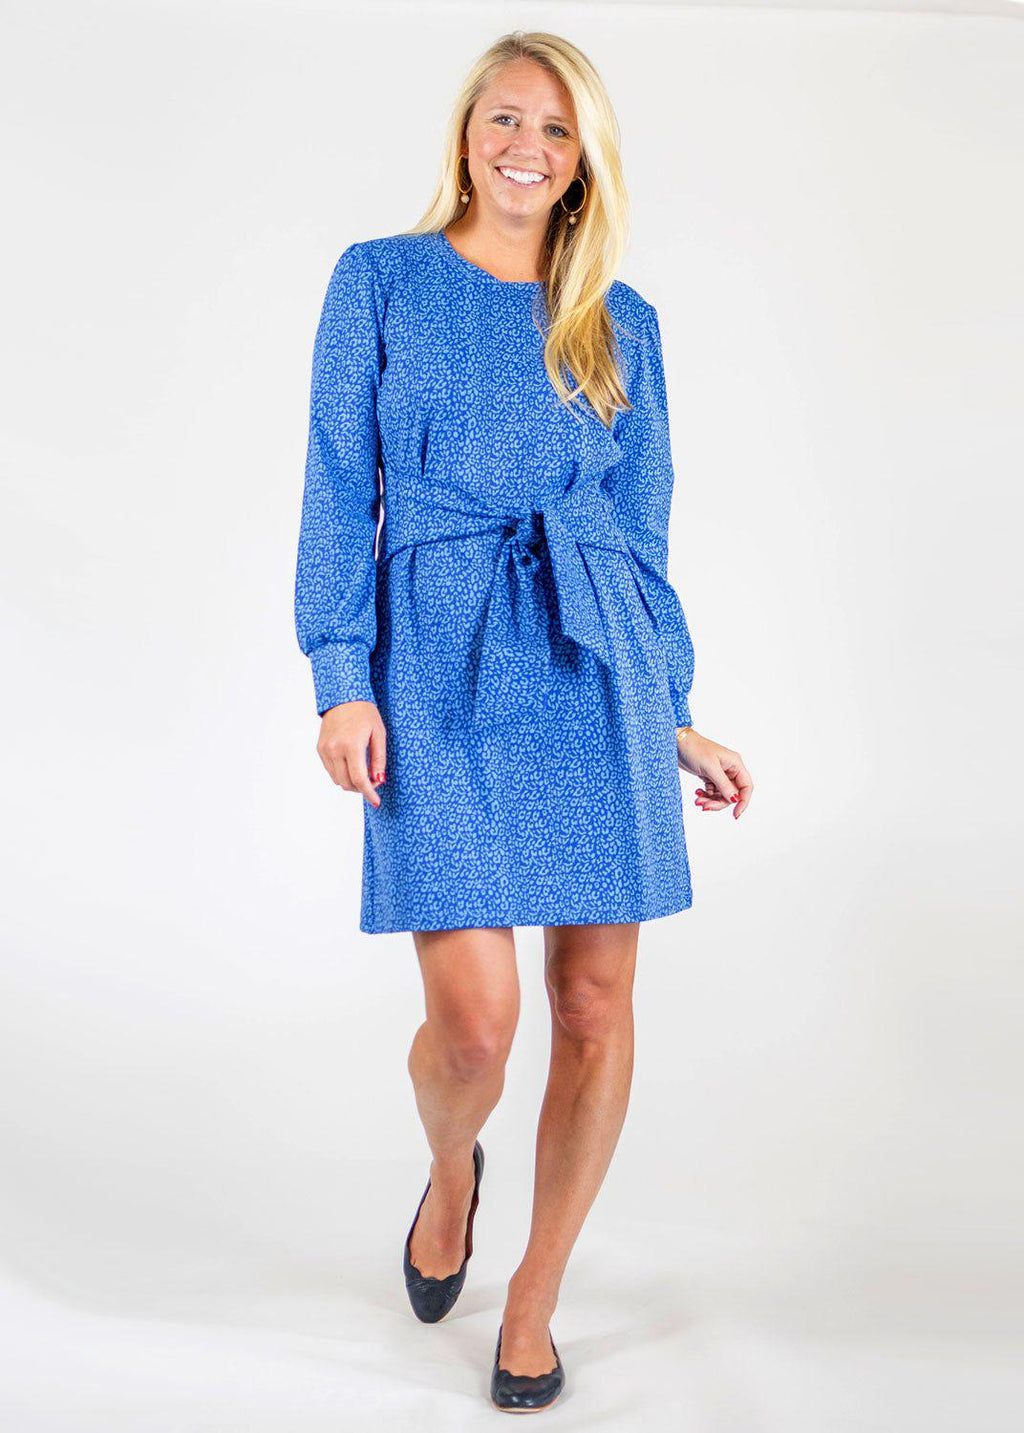 Blue Sydney Full Sleeve Dress in a Cheetah Print